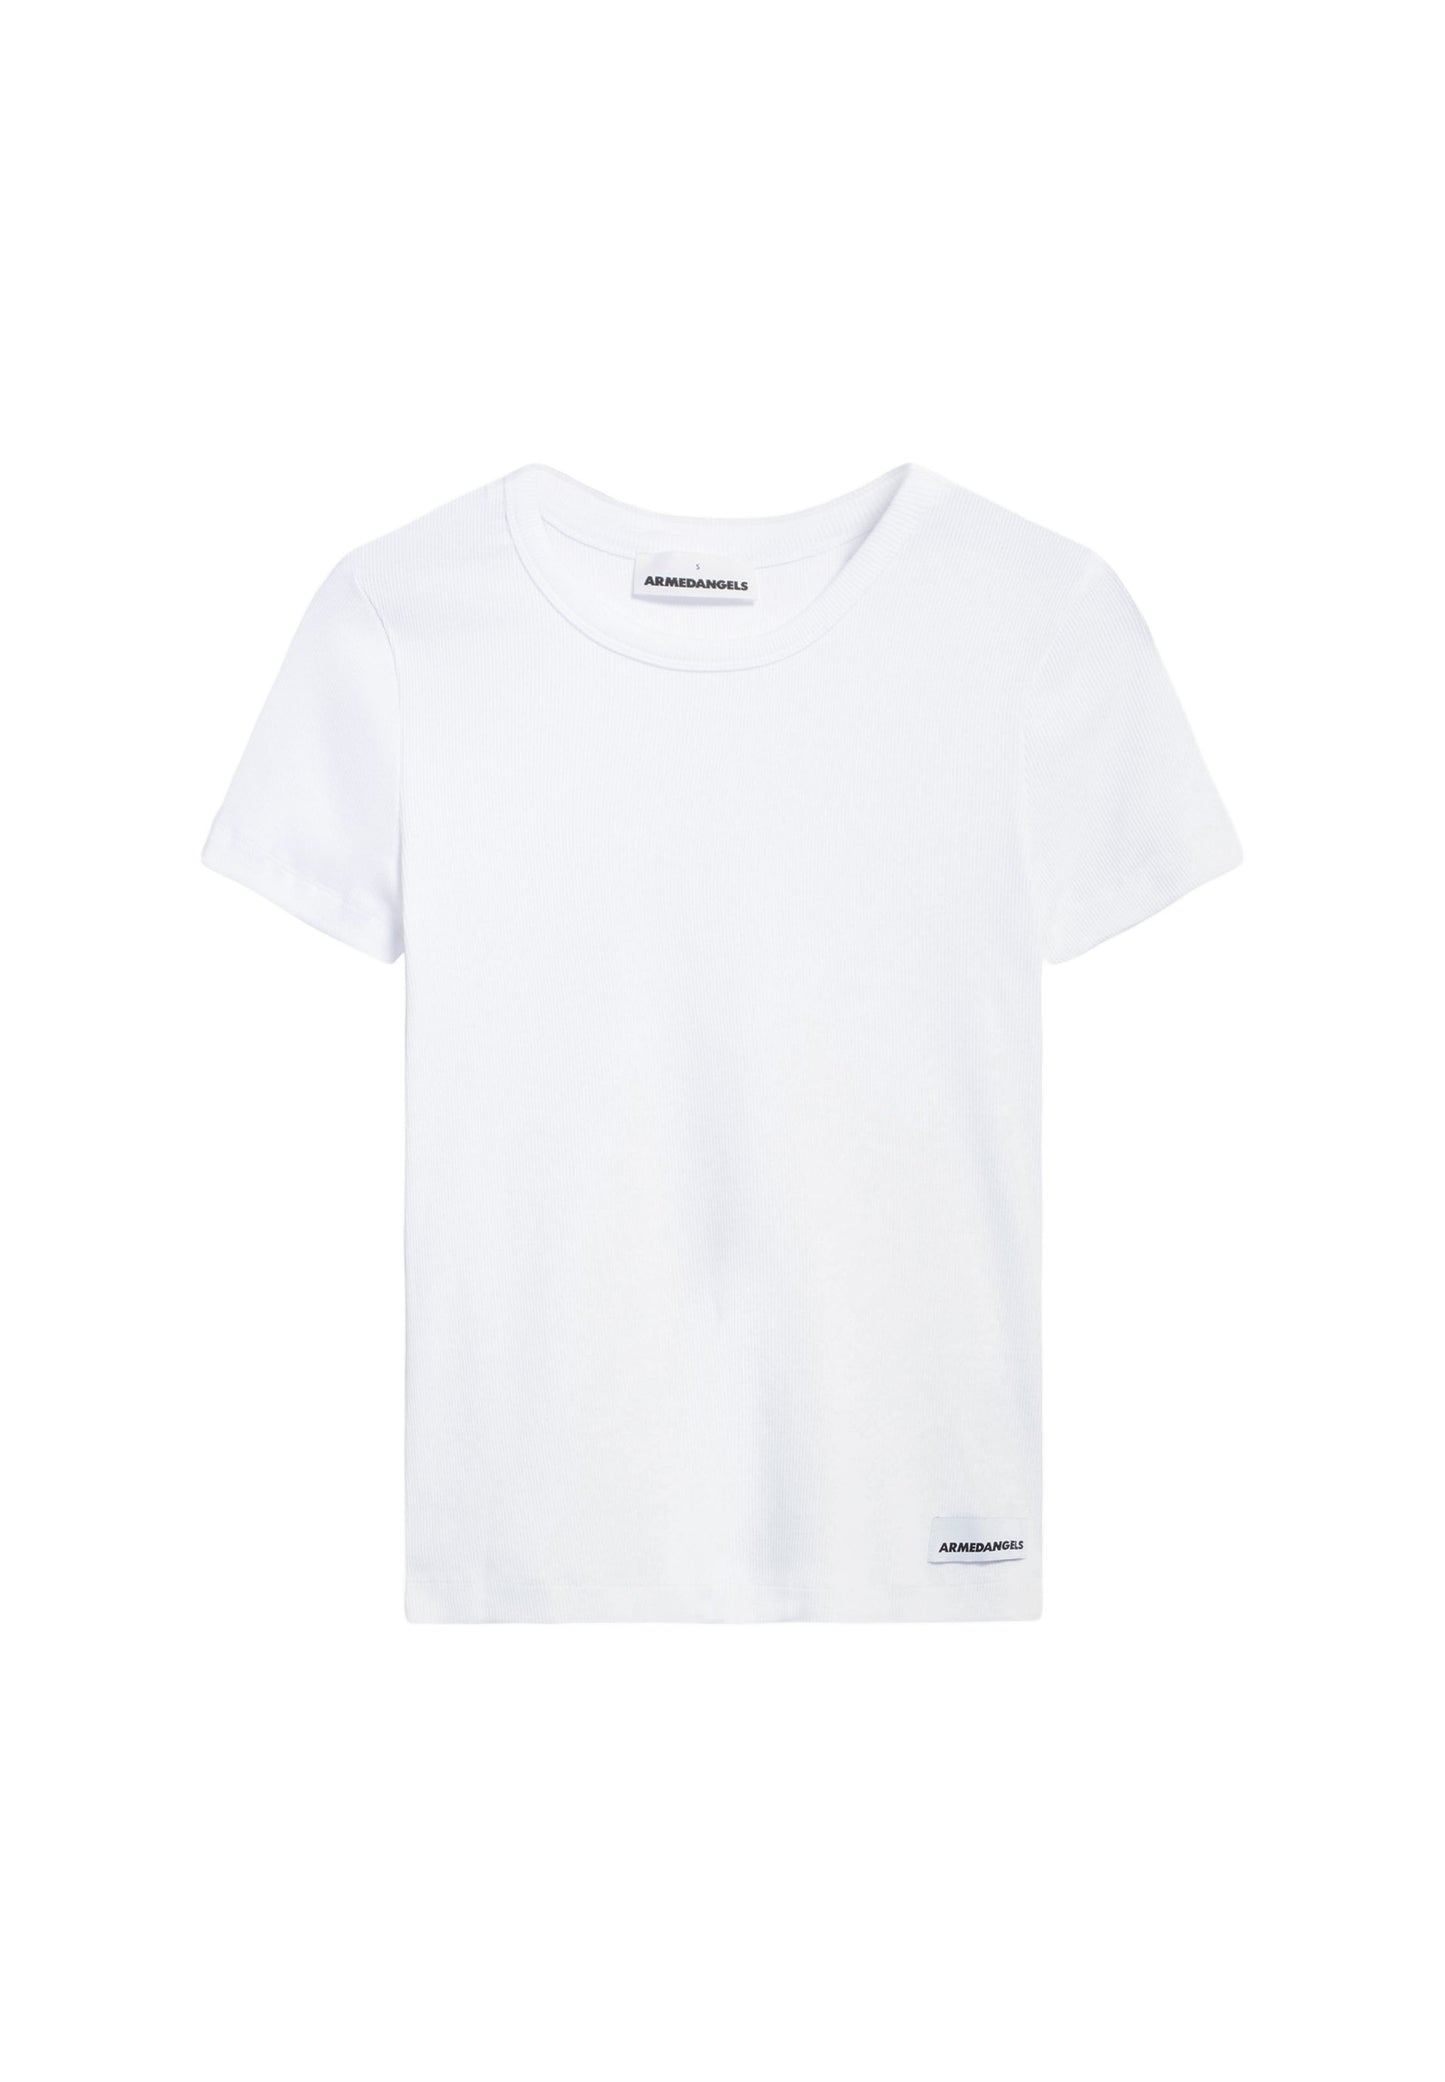 KARDAA Shirts T-Shirt Solid, white